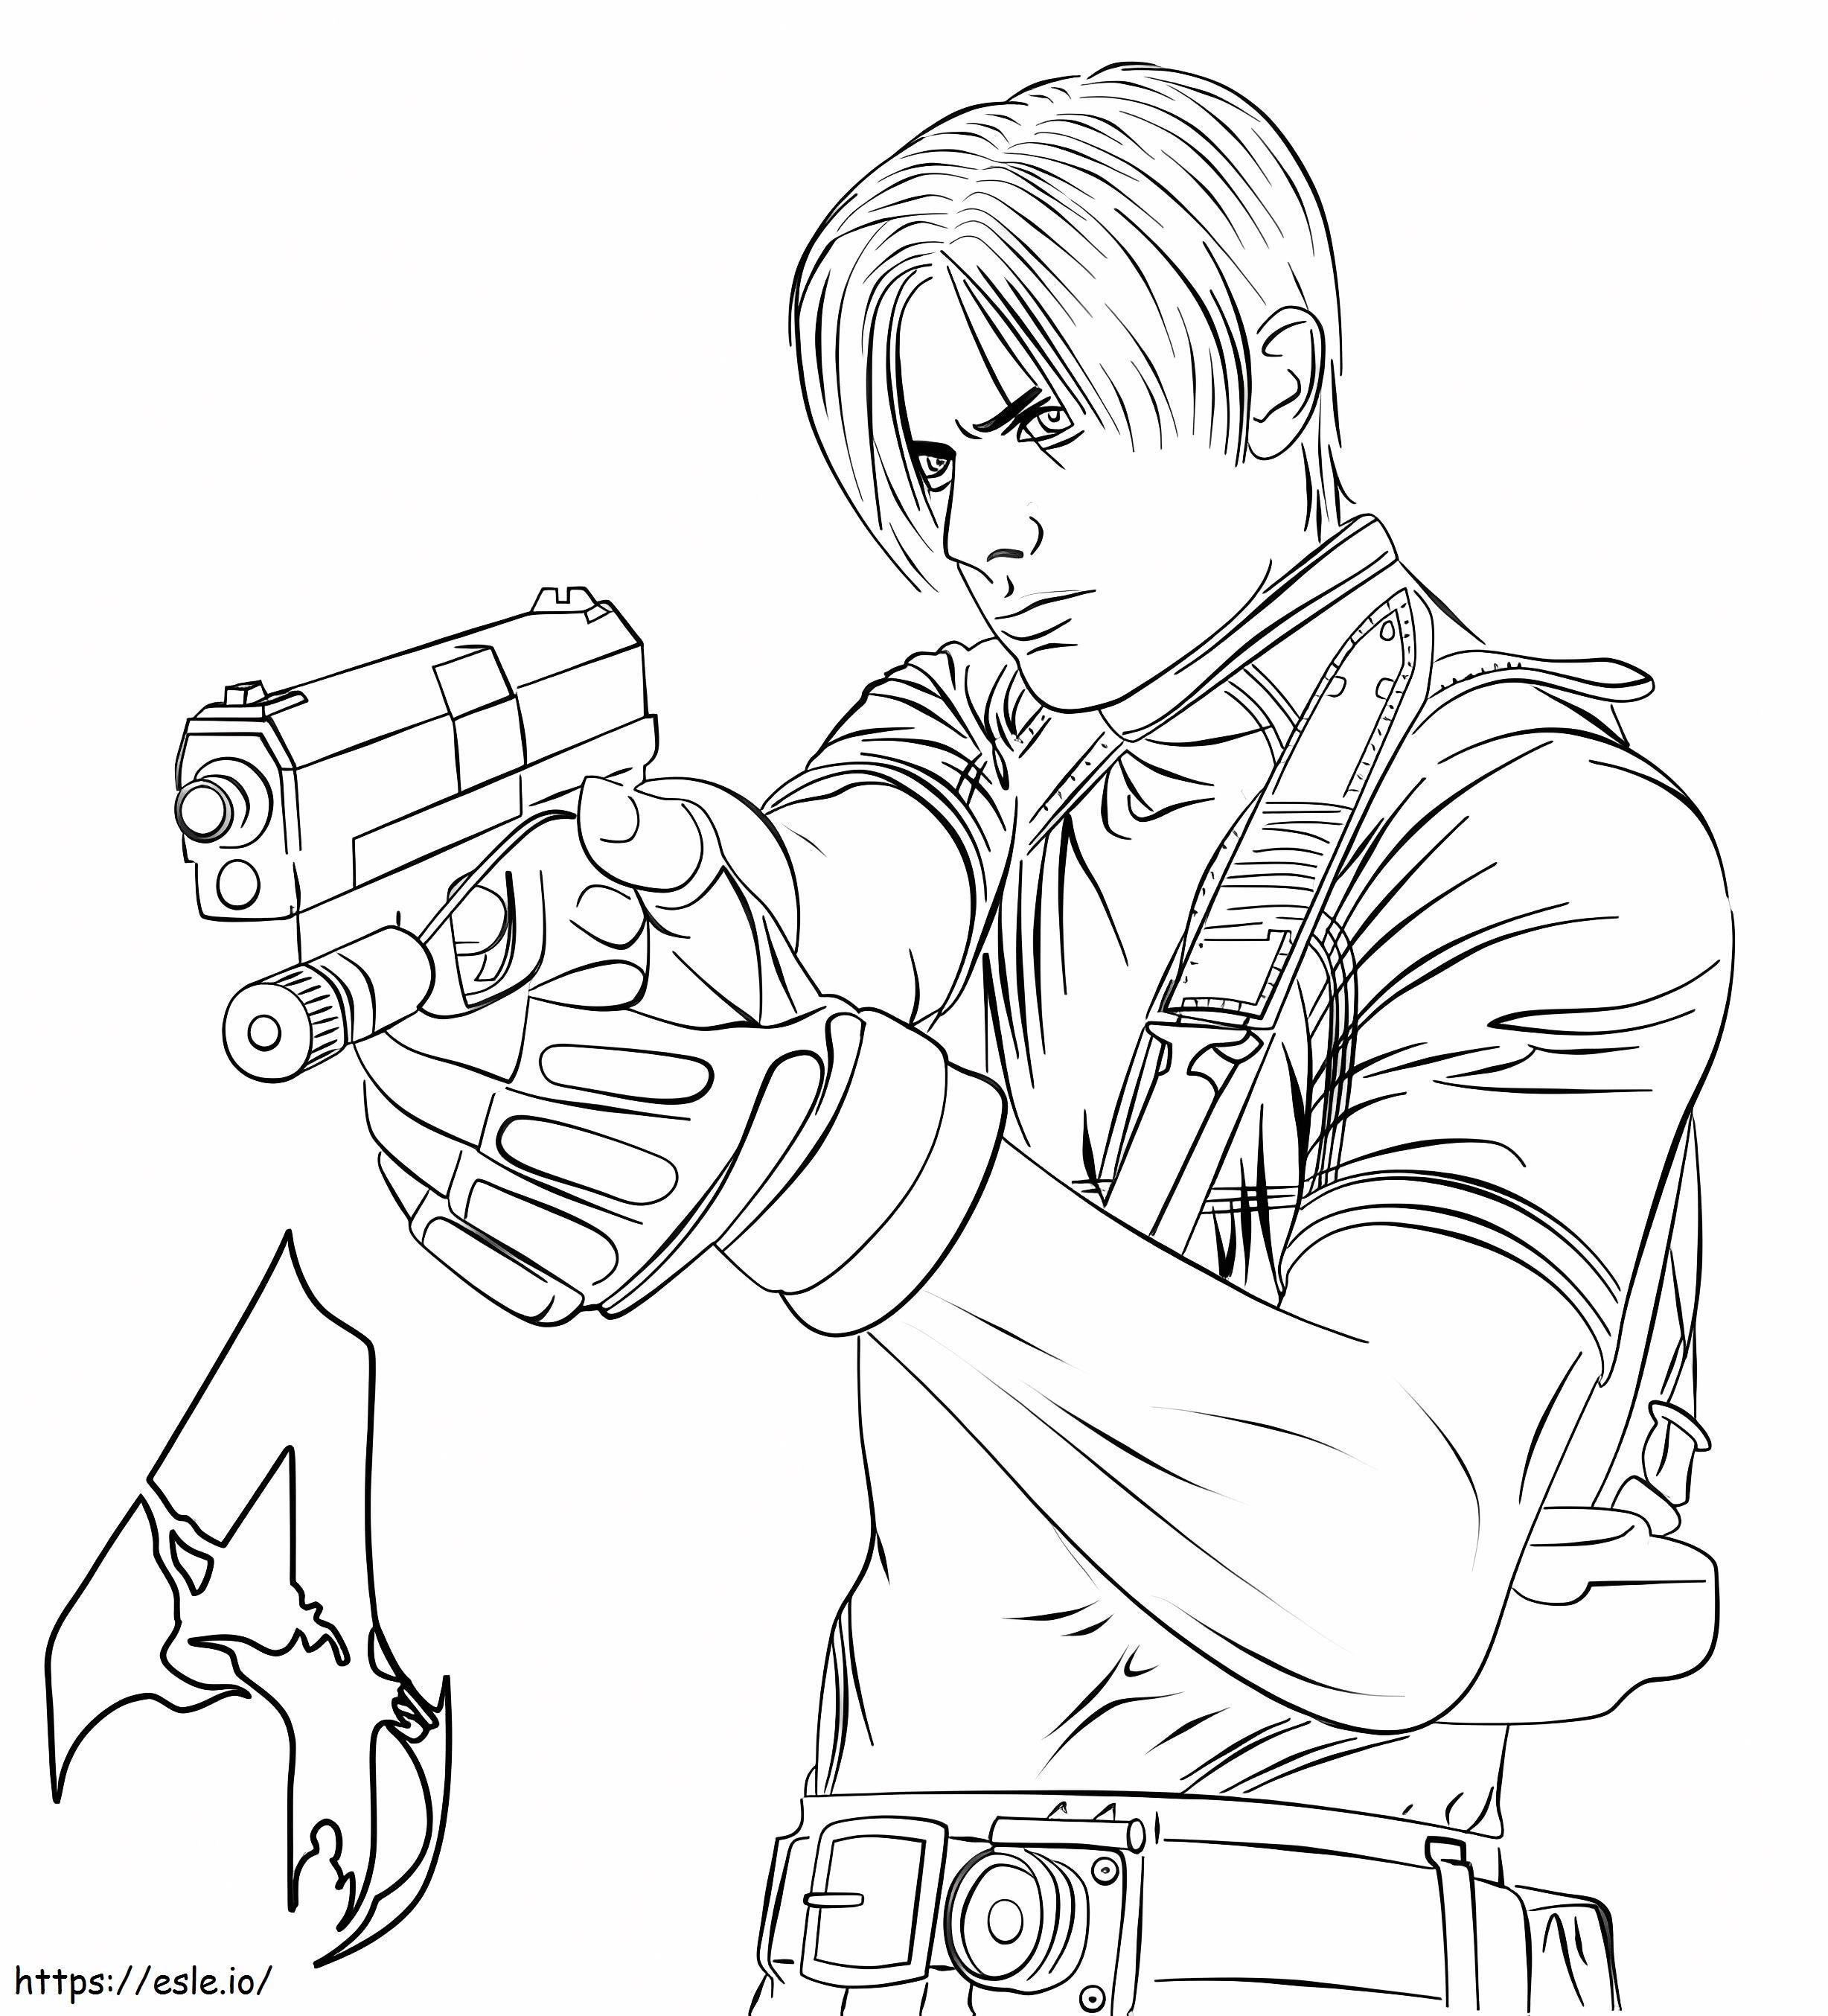 Leon z Resident Evil kolorowanka